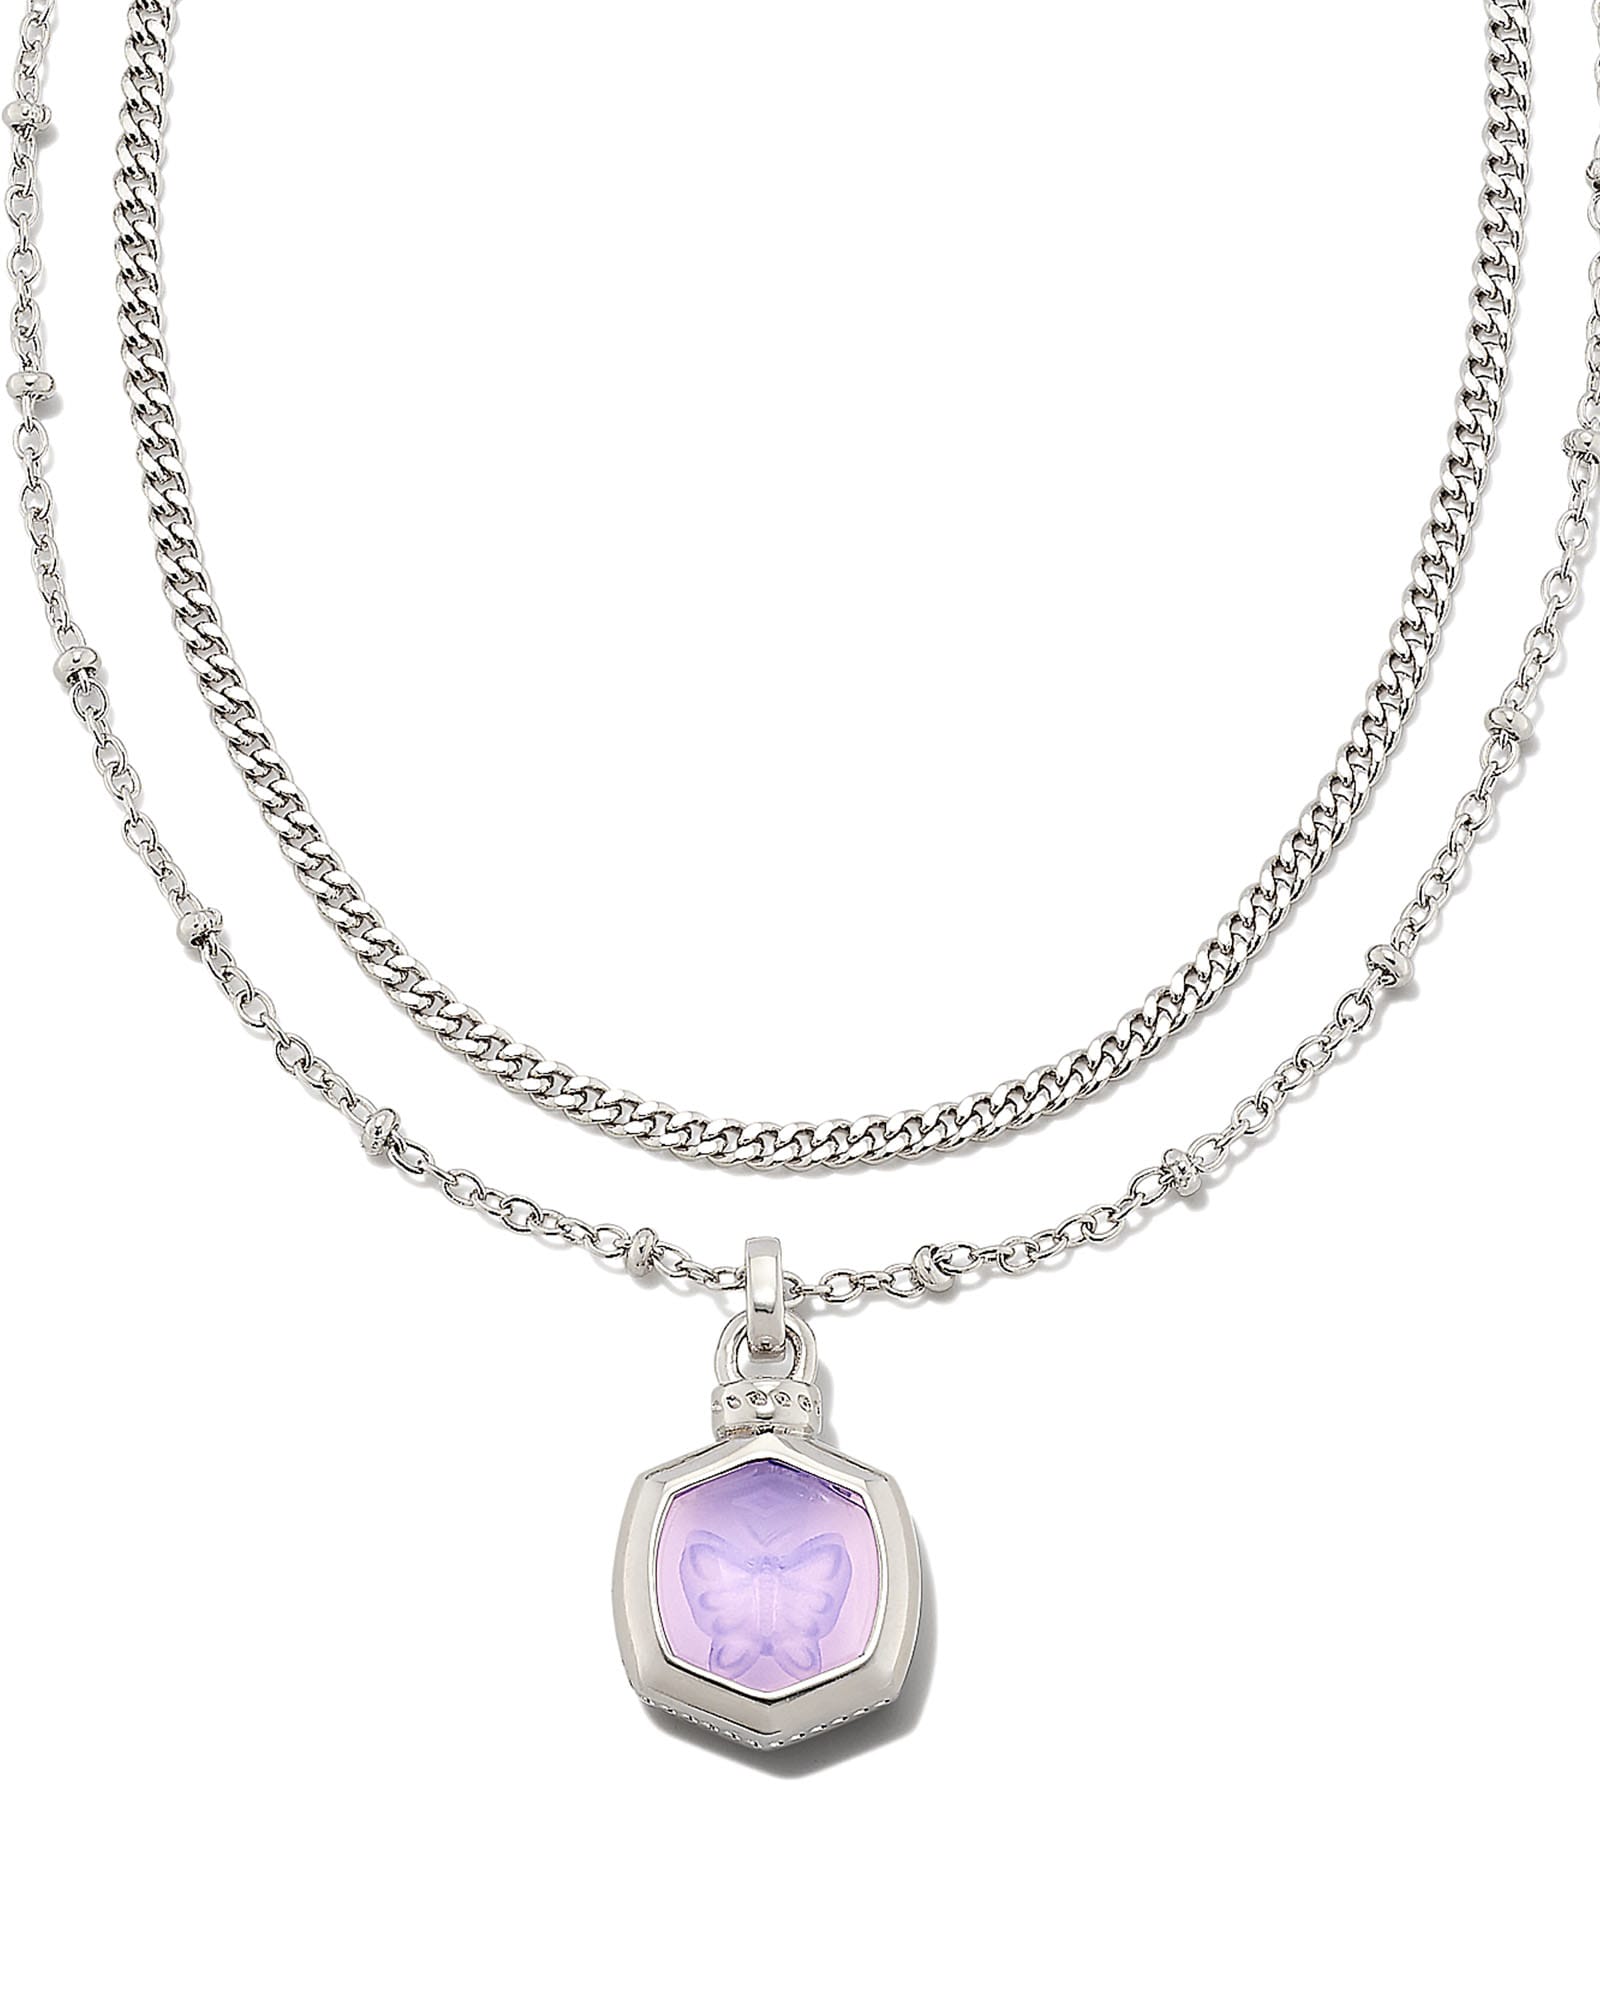 Davie Intaglio Silver Multi Strand Necklace in Lavender Opalite Glass Butterfly